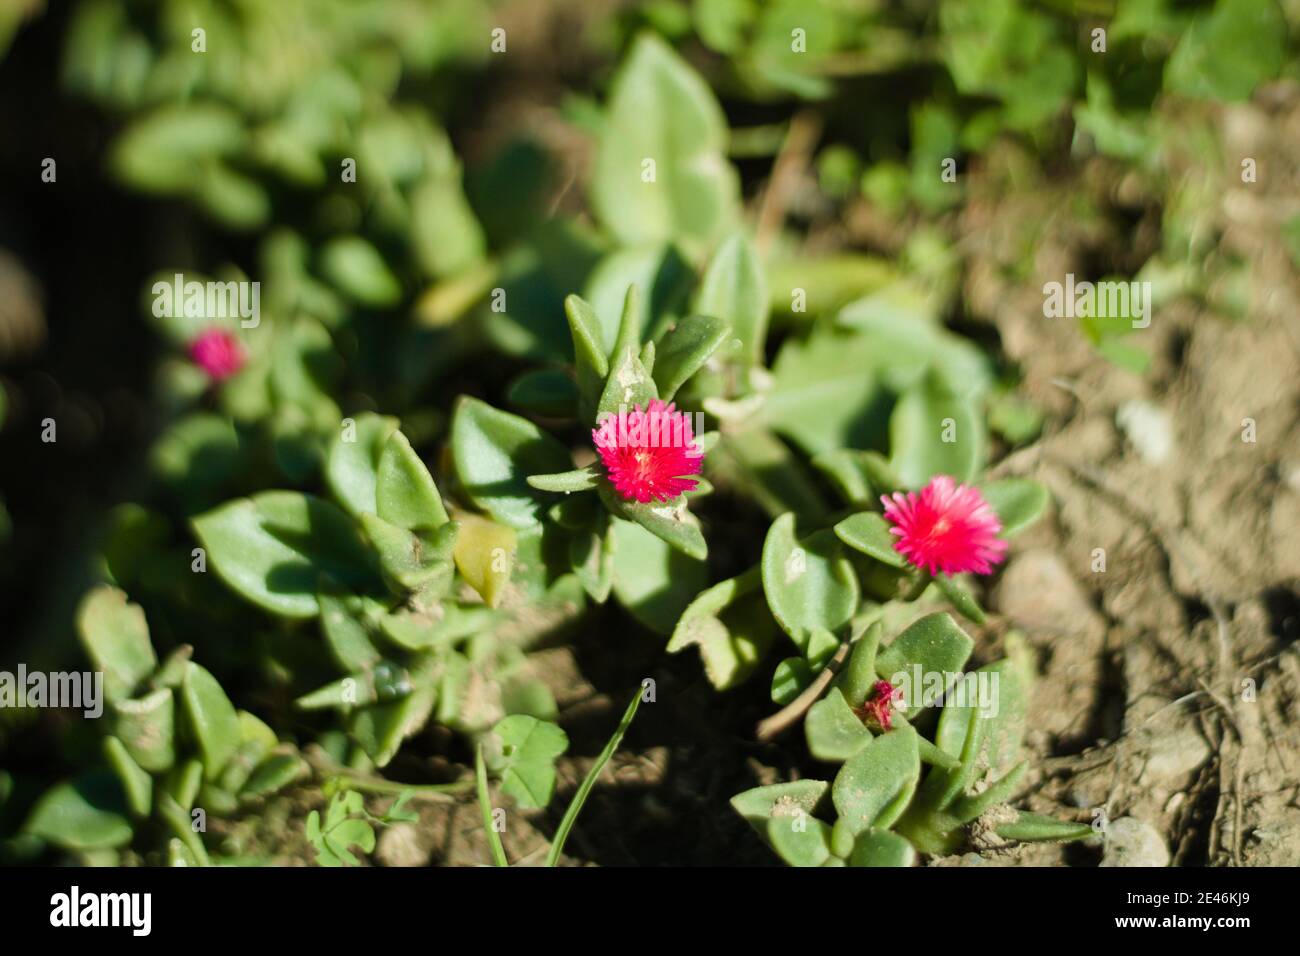 Baby sun rose flower. Latin name is aptenia cordifolia or mesembryanthemum cordifolium. Stock Photo